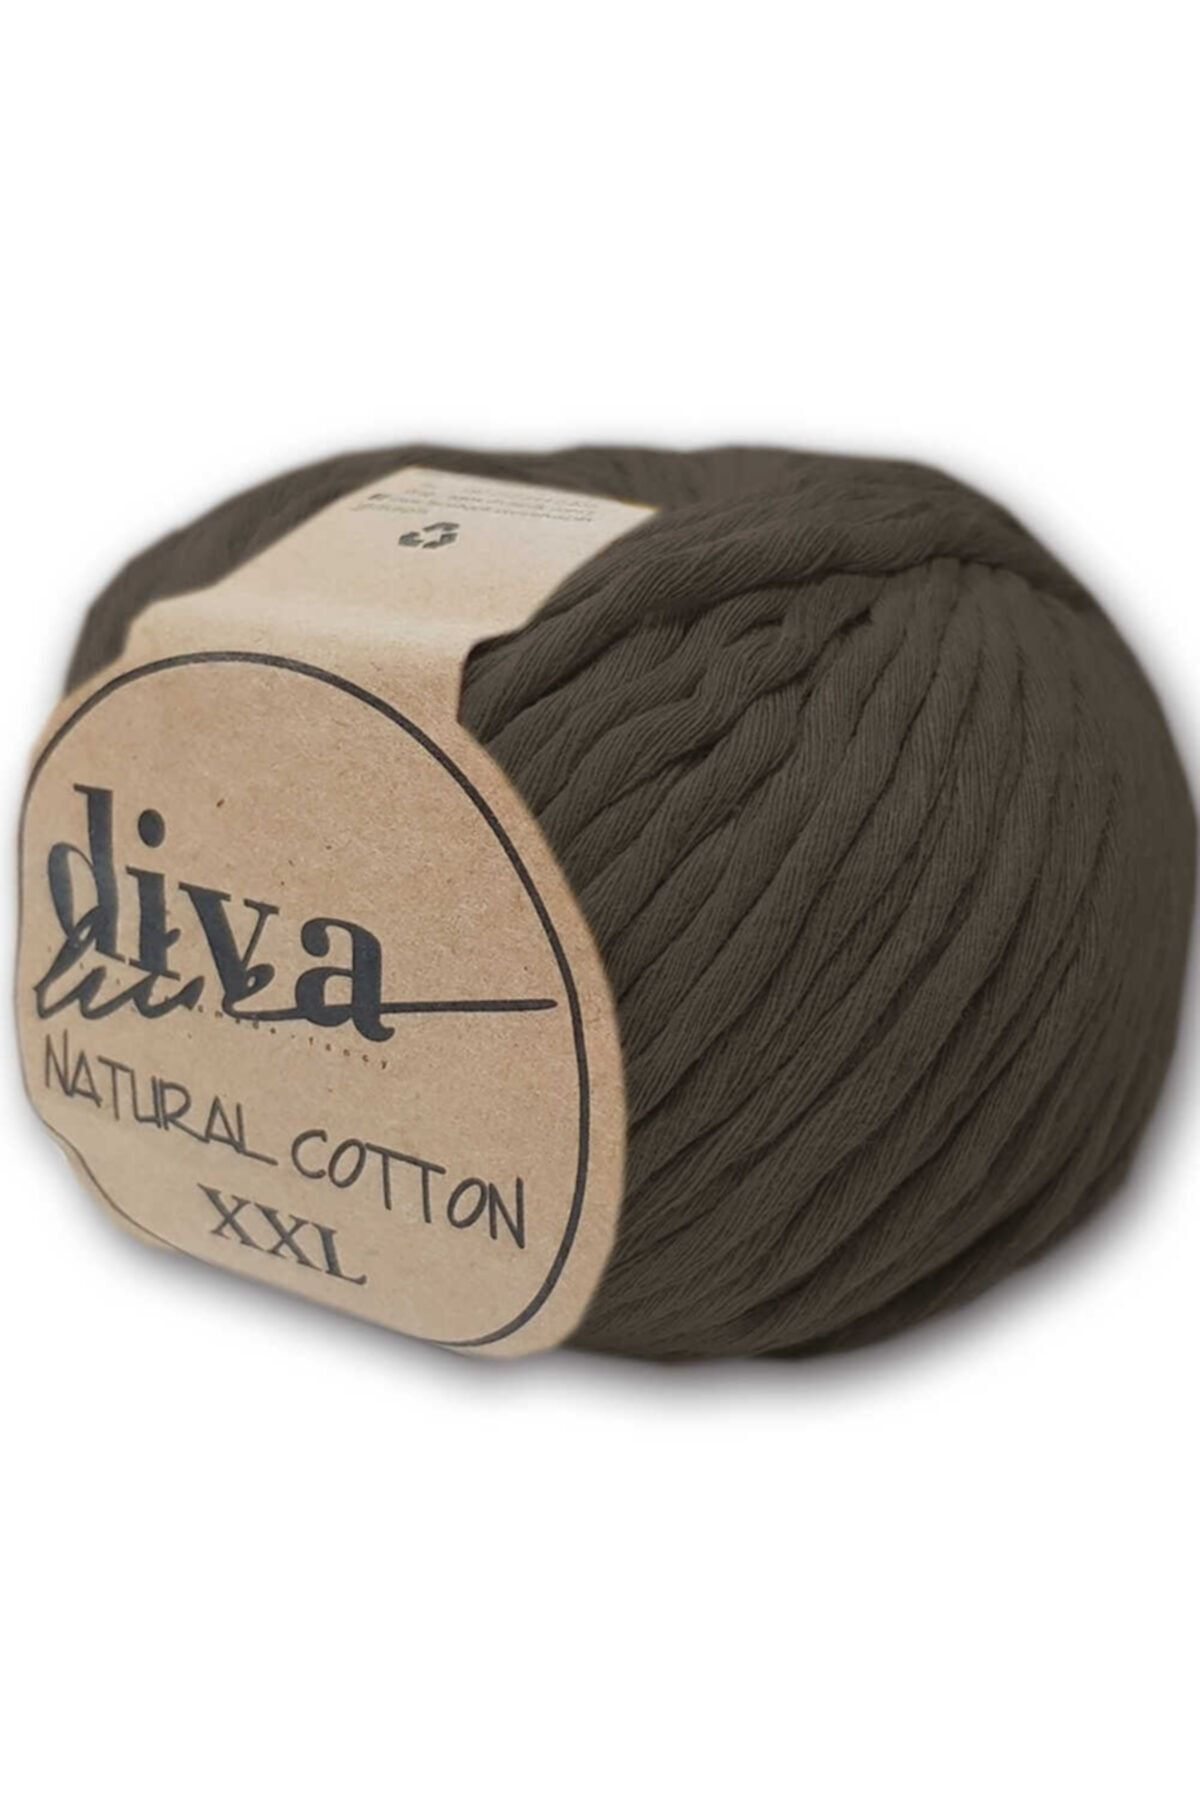 Diva İplik Diva Natural Cotton Xxl 169 Koyu Vizon